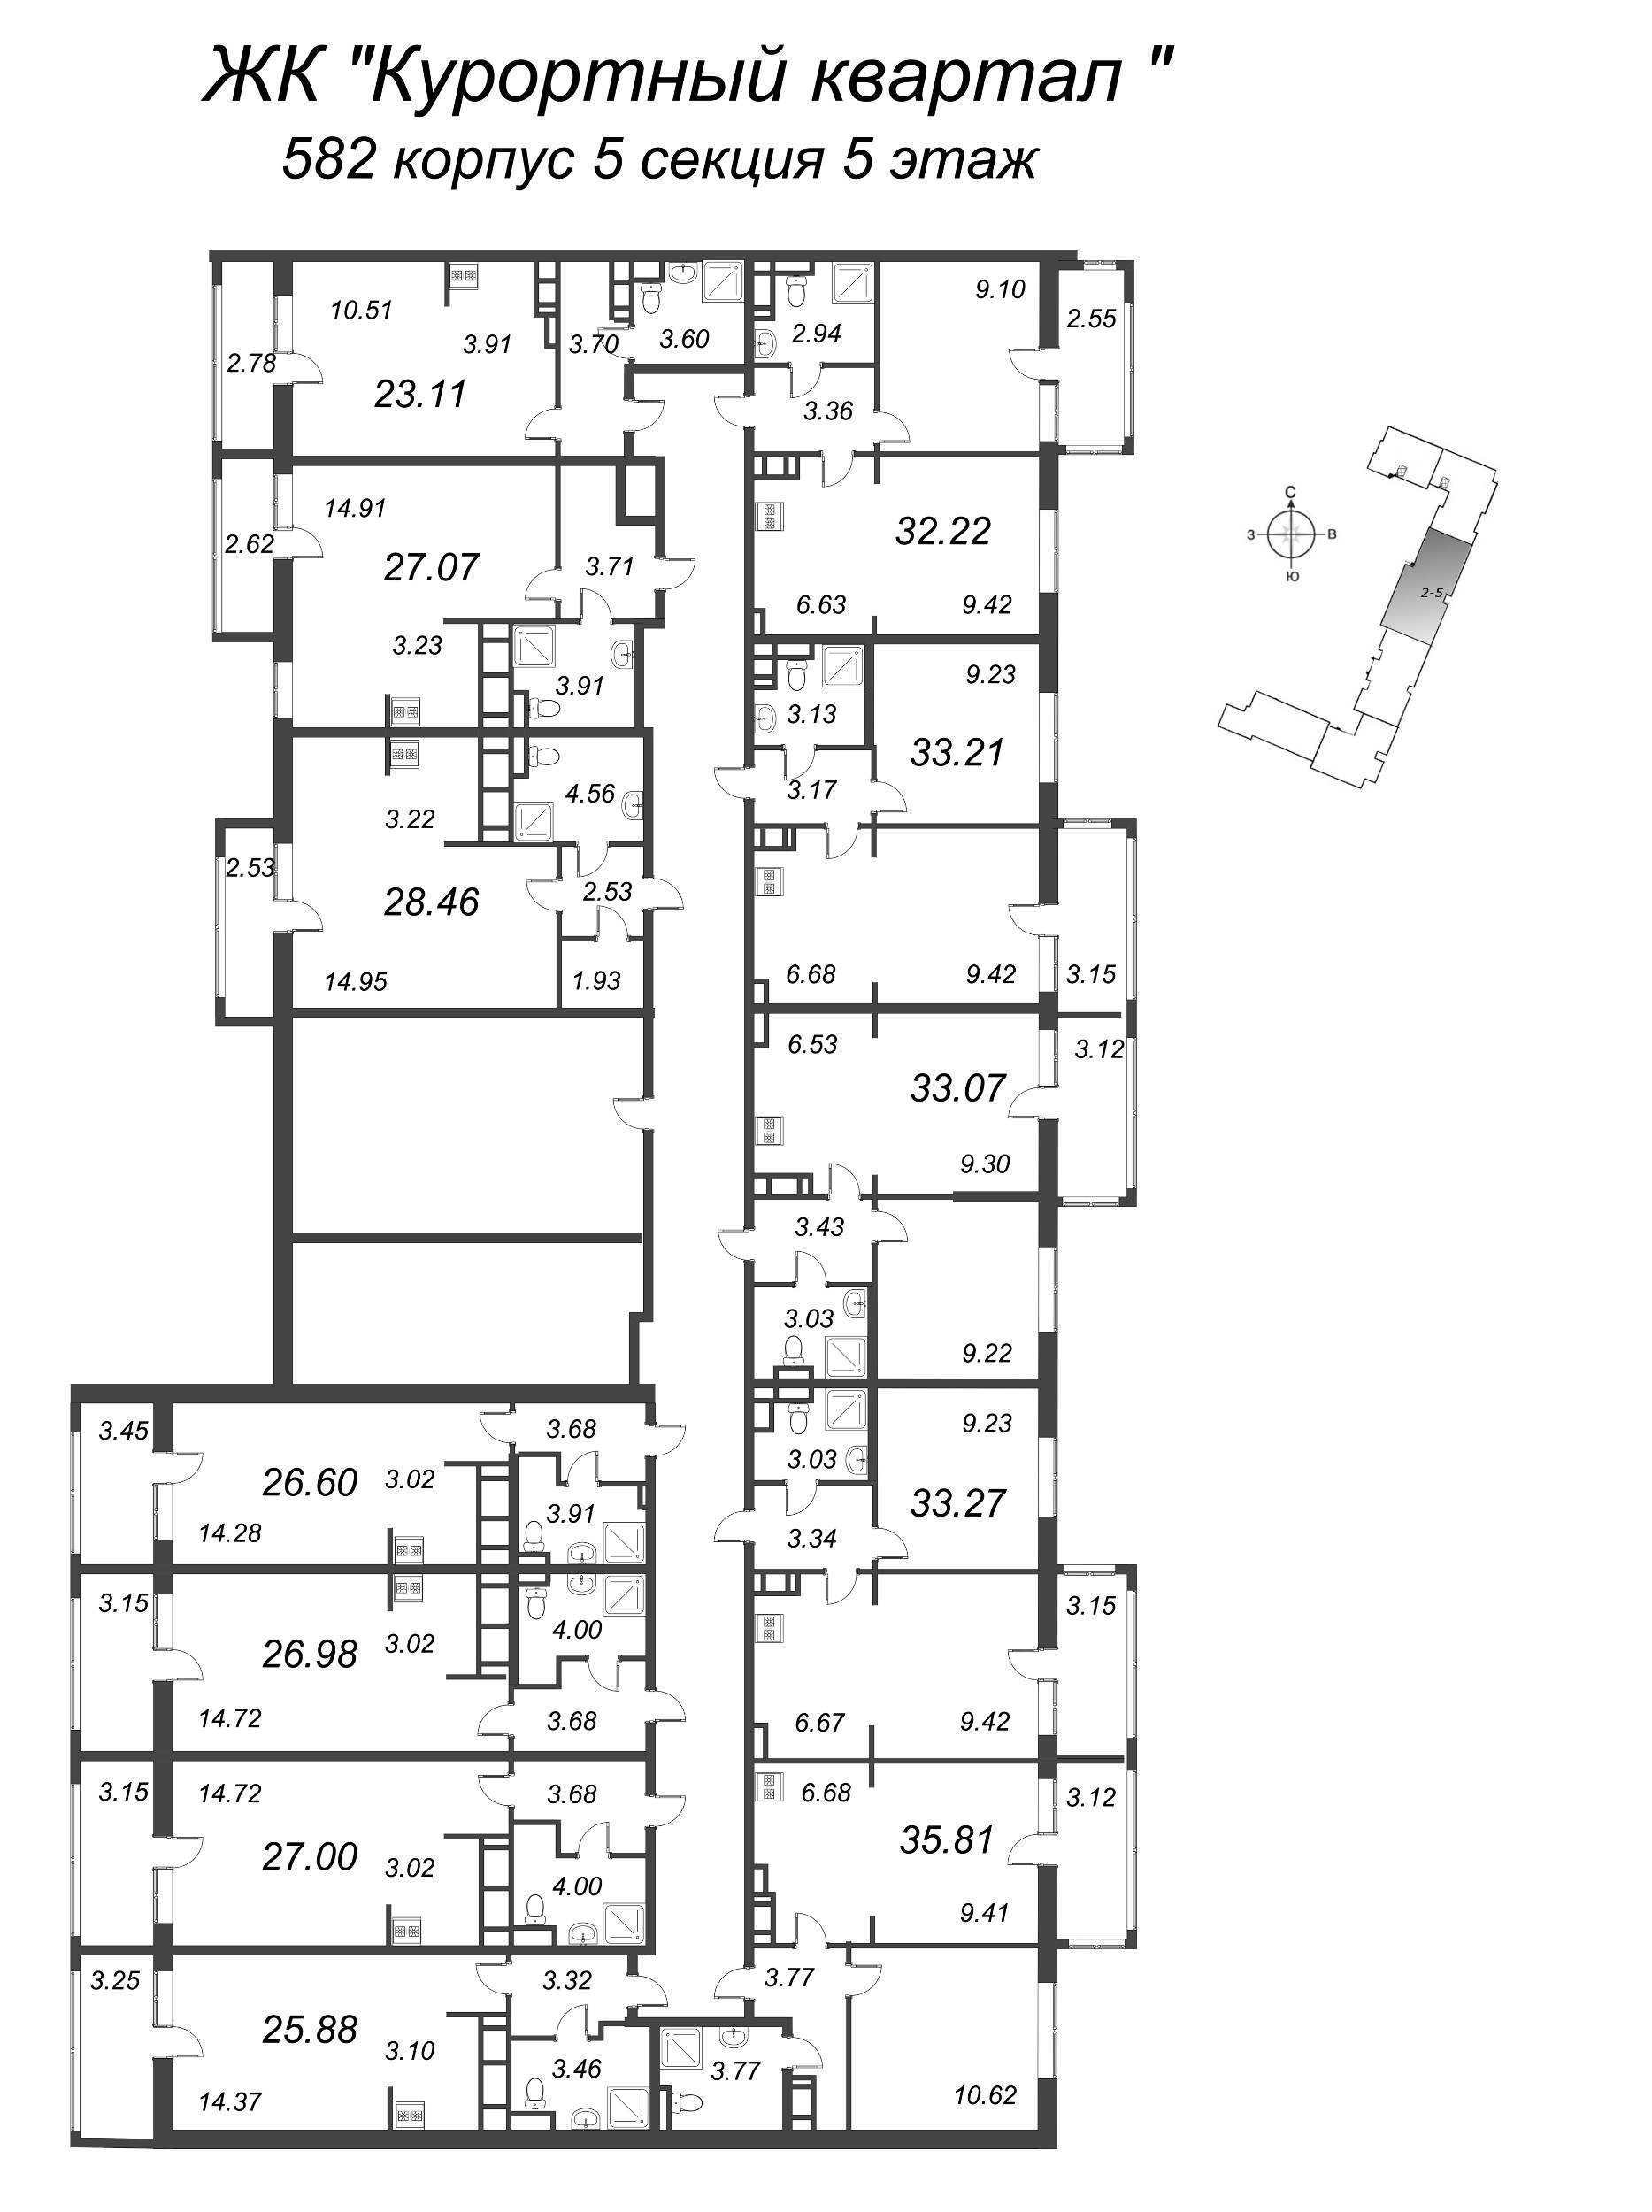 2-комнатная (Евро) квартира, 32.22 м² - планировка этажа